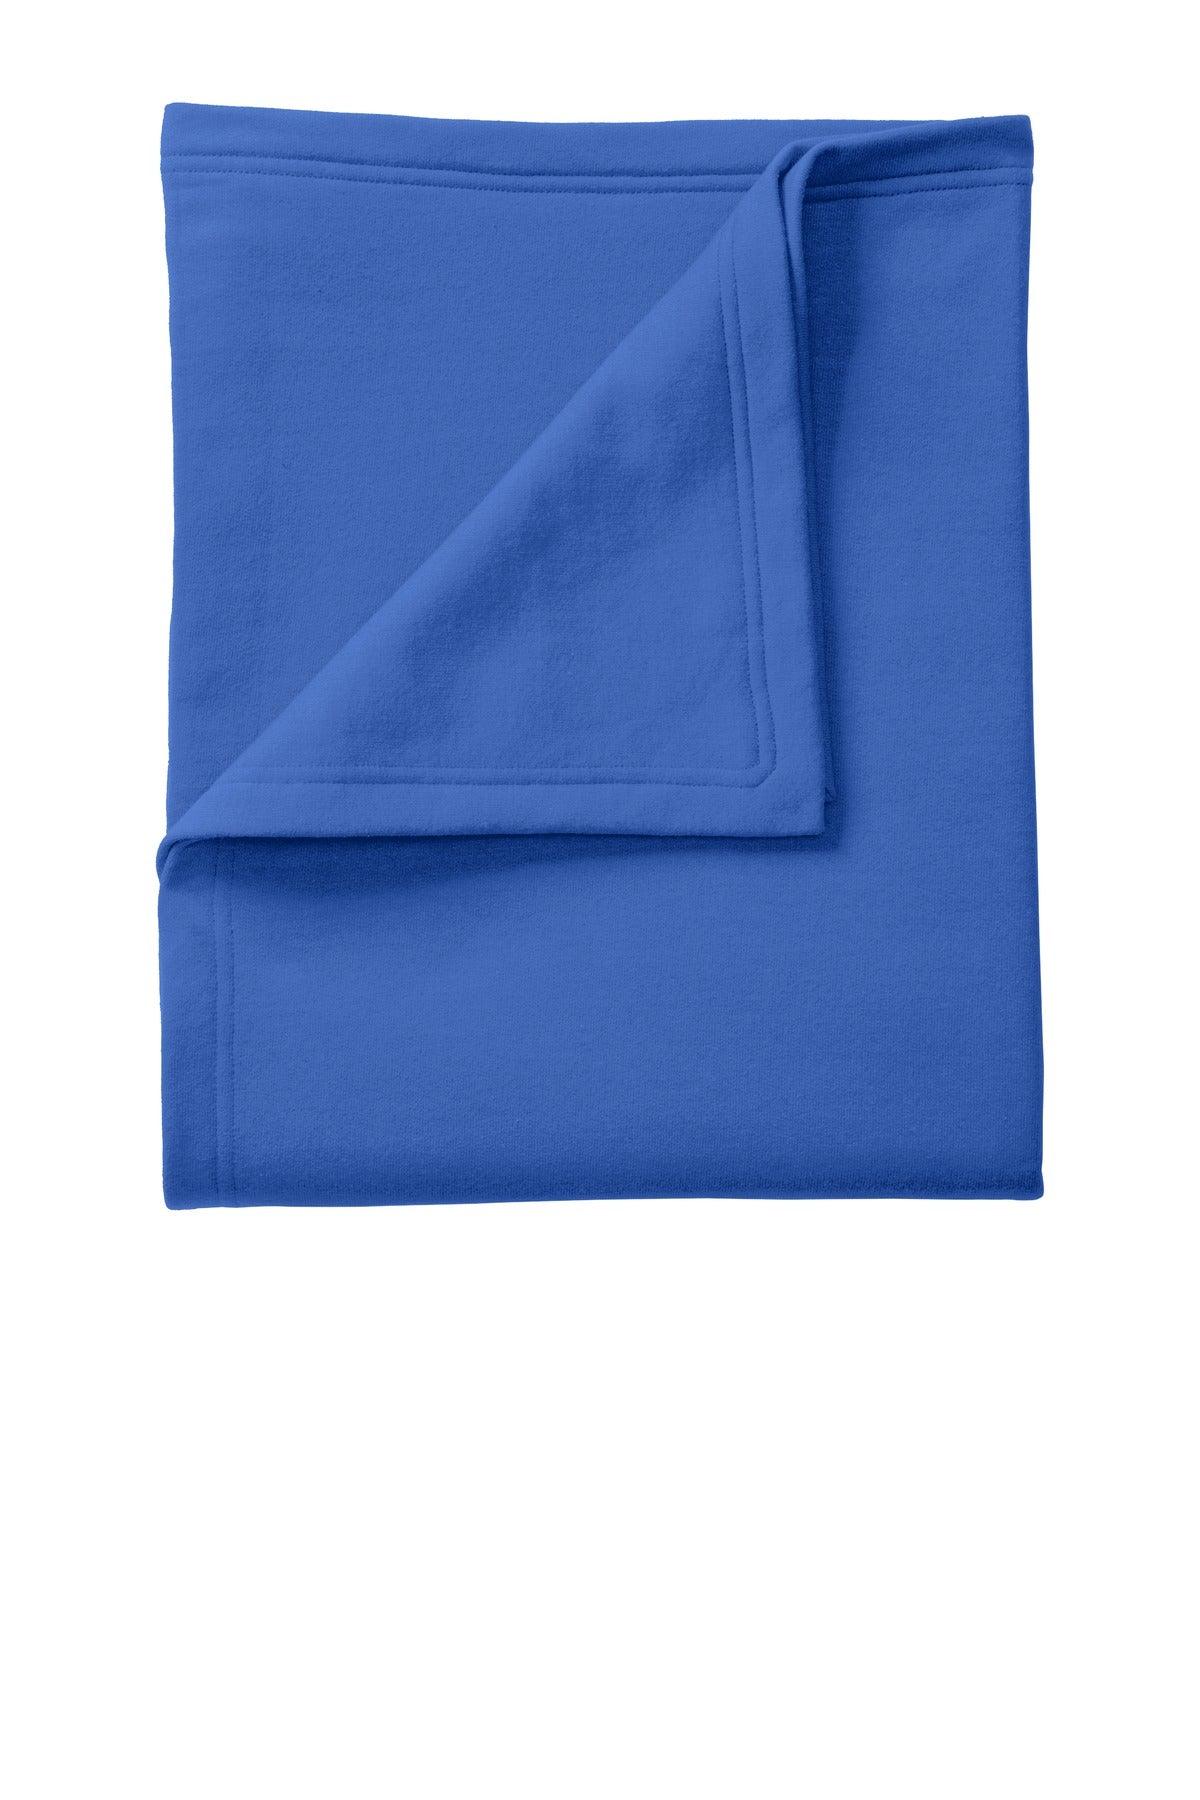 Port & Company Core Fleece Sweatshirt Blanket. BP78 - Dresses Max